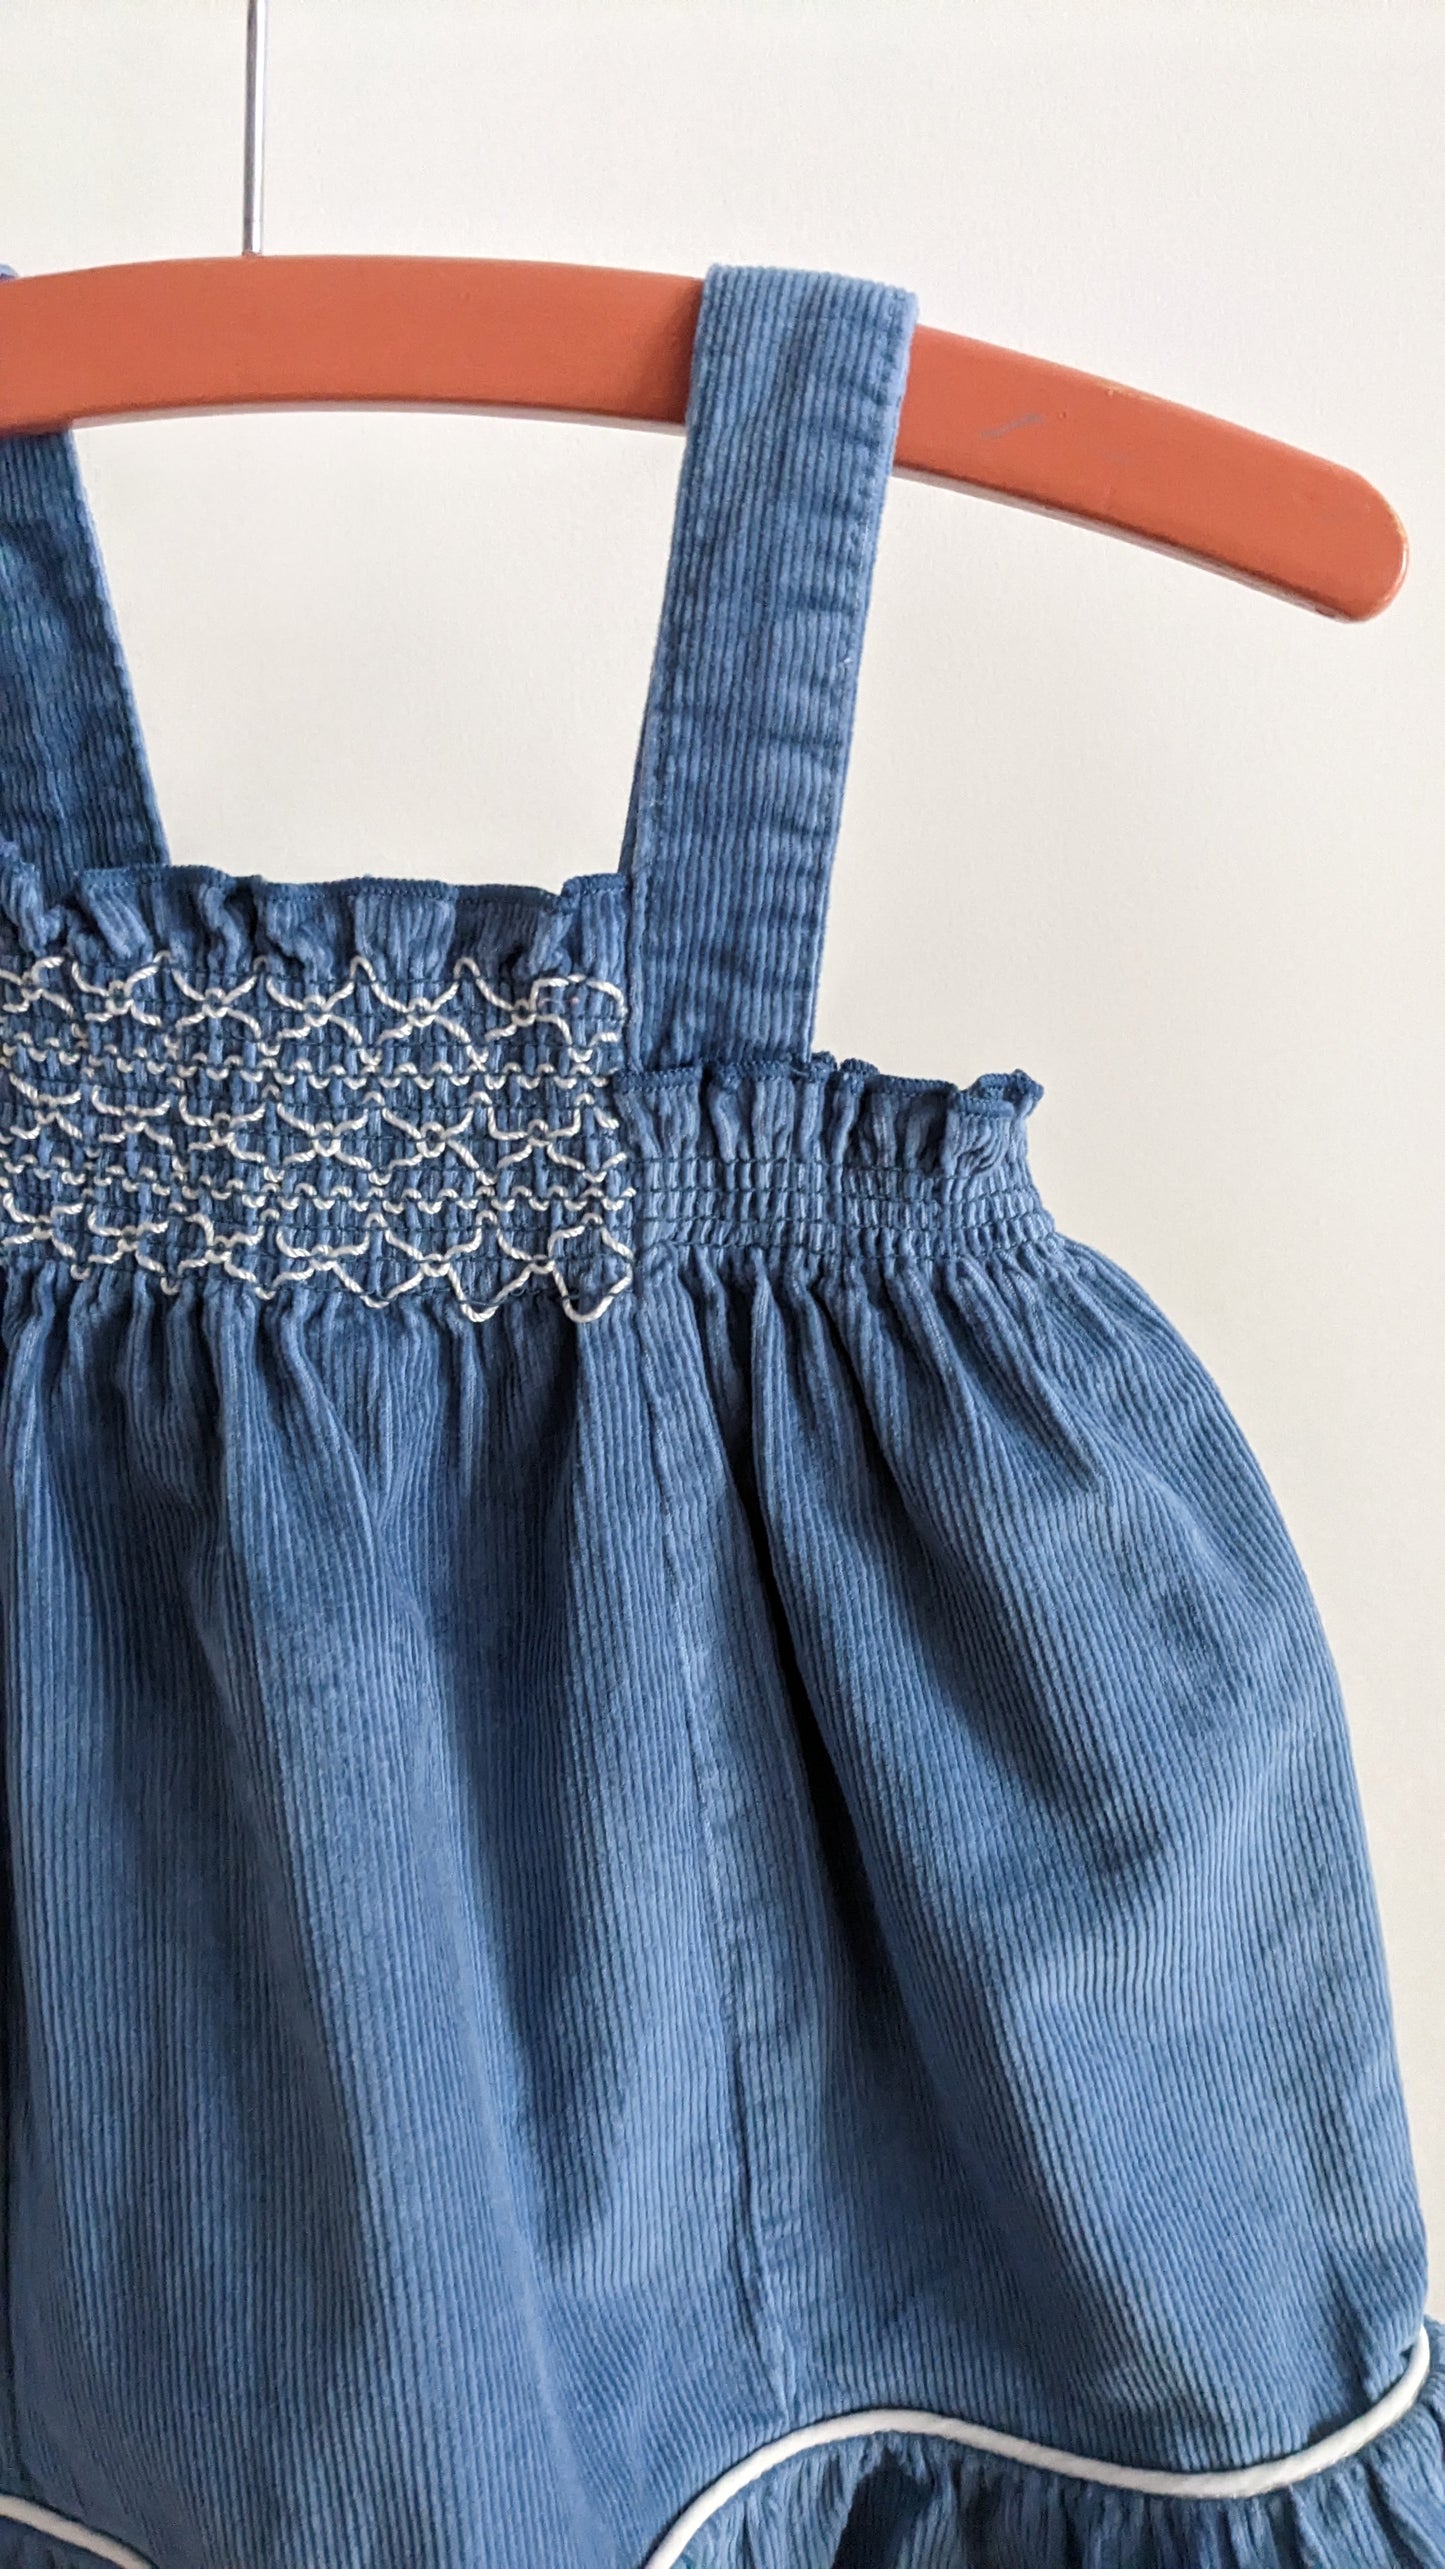 Steel blue corduroy baby dress